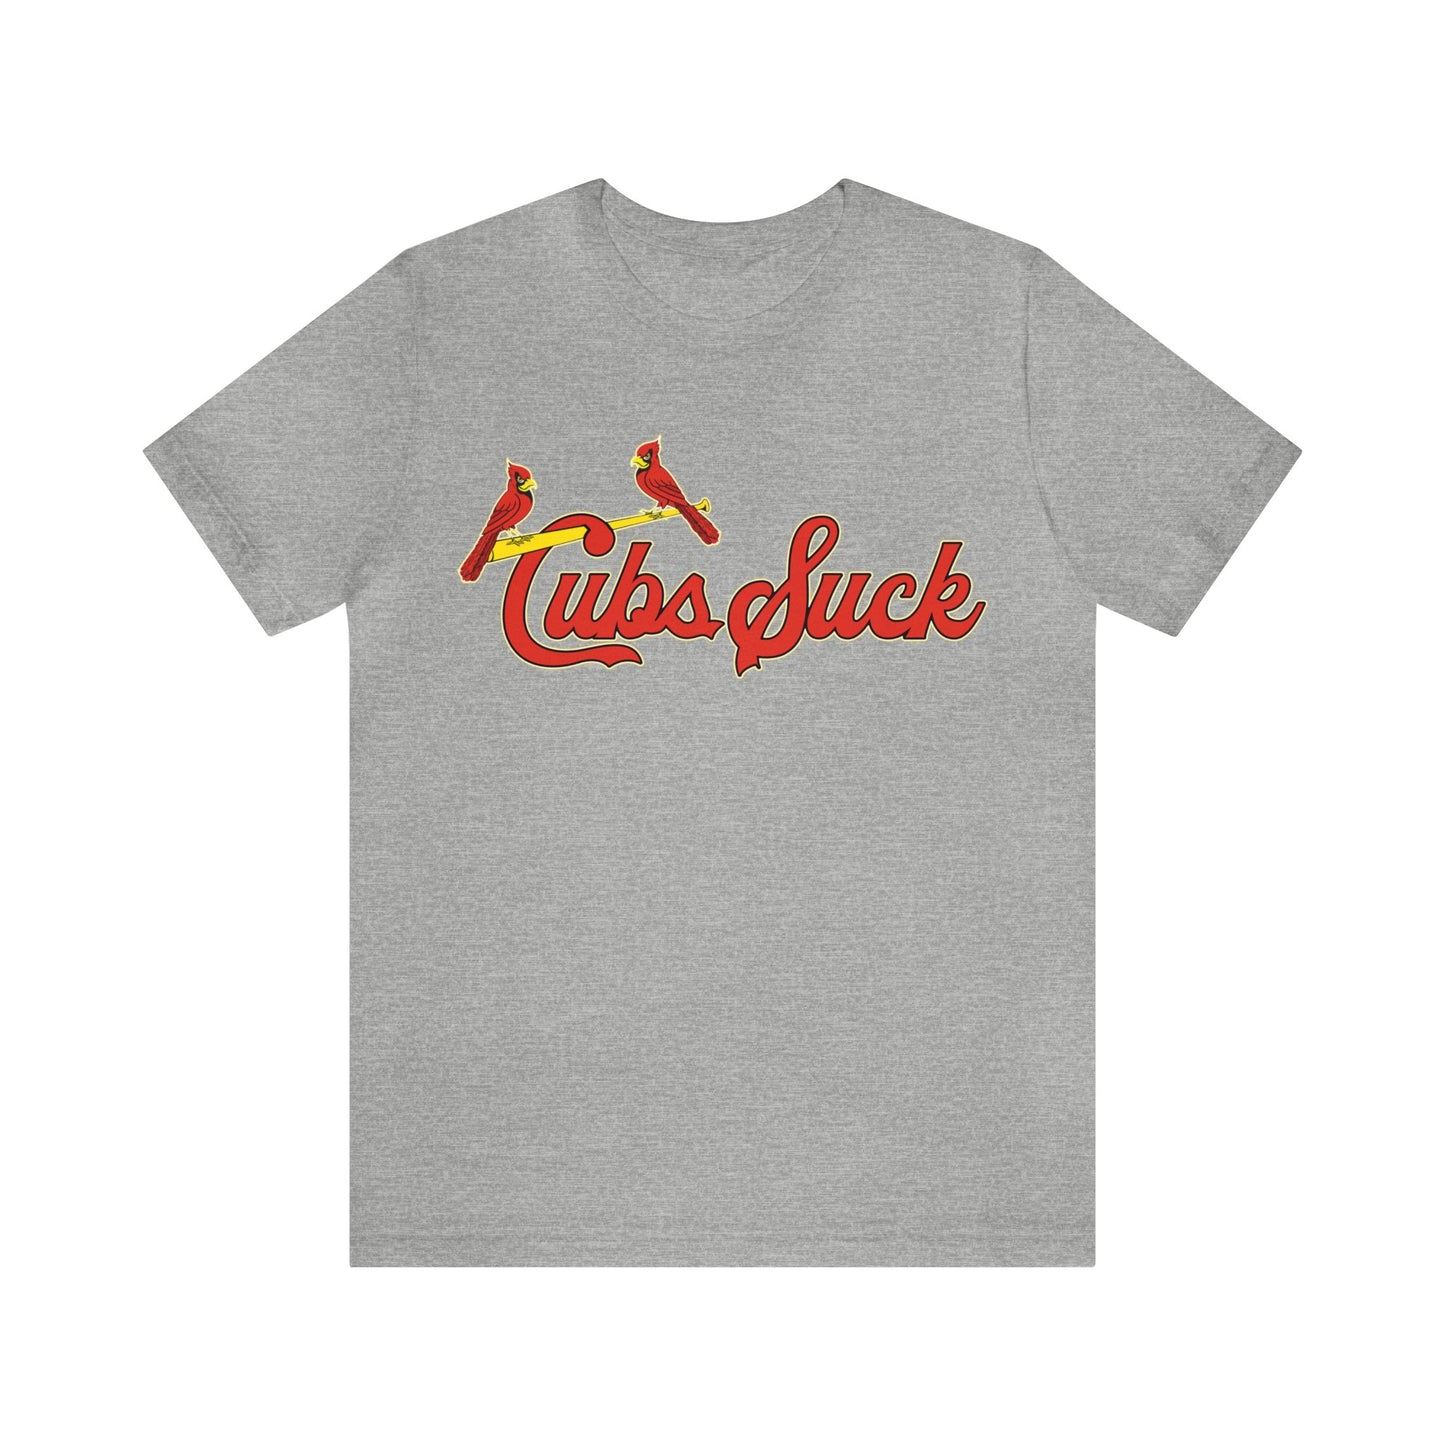 The Cubbs Suck (for St. Louis Cardinal fans) - Unisex Jersey Short Sleeve Tee